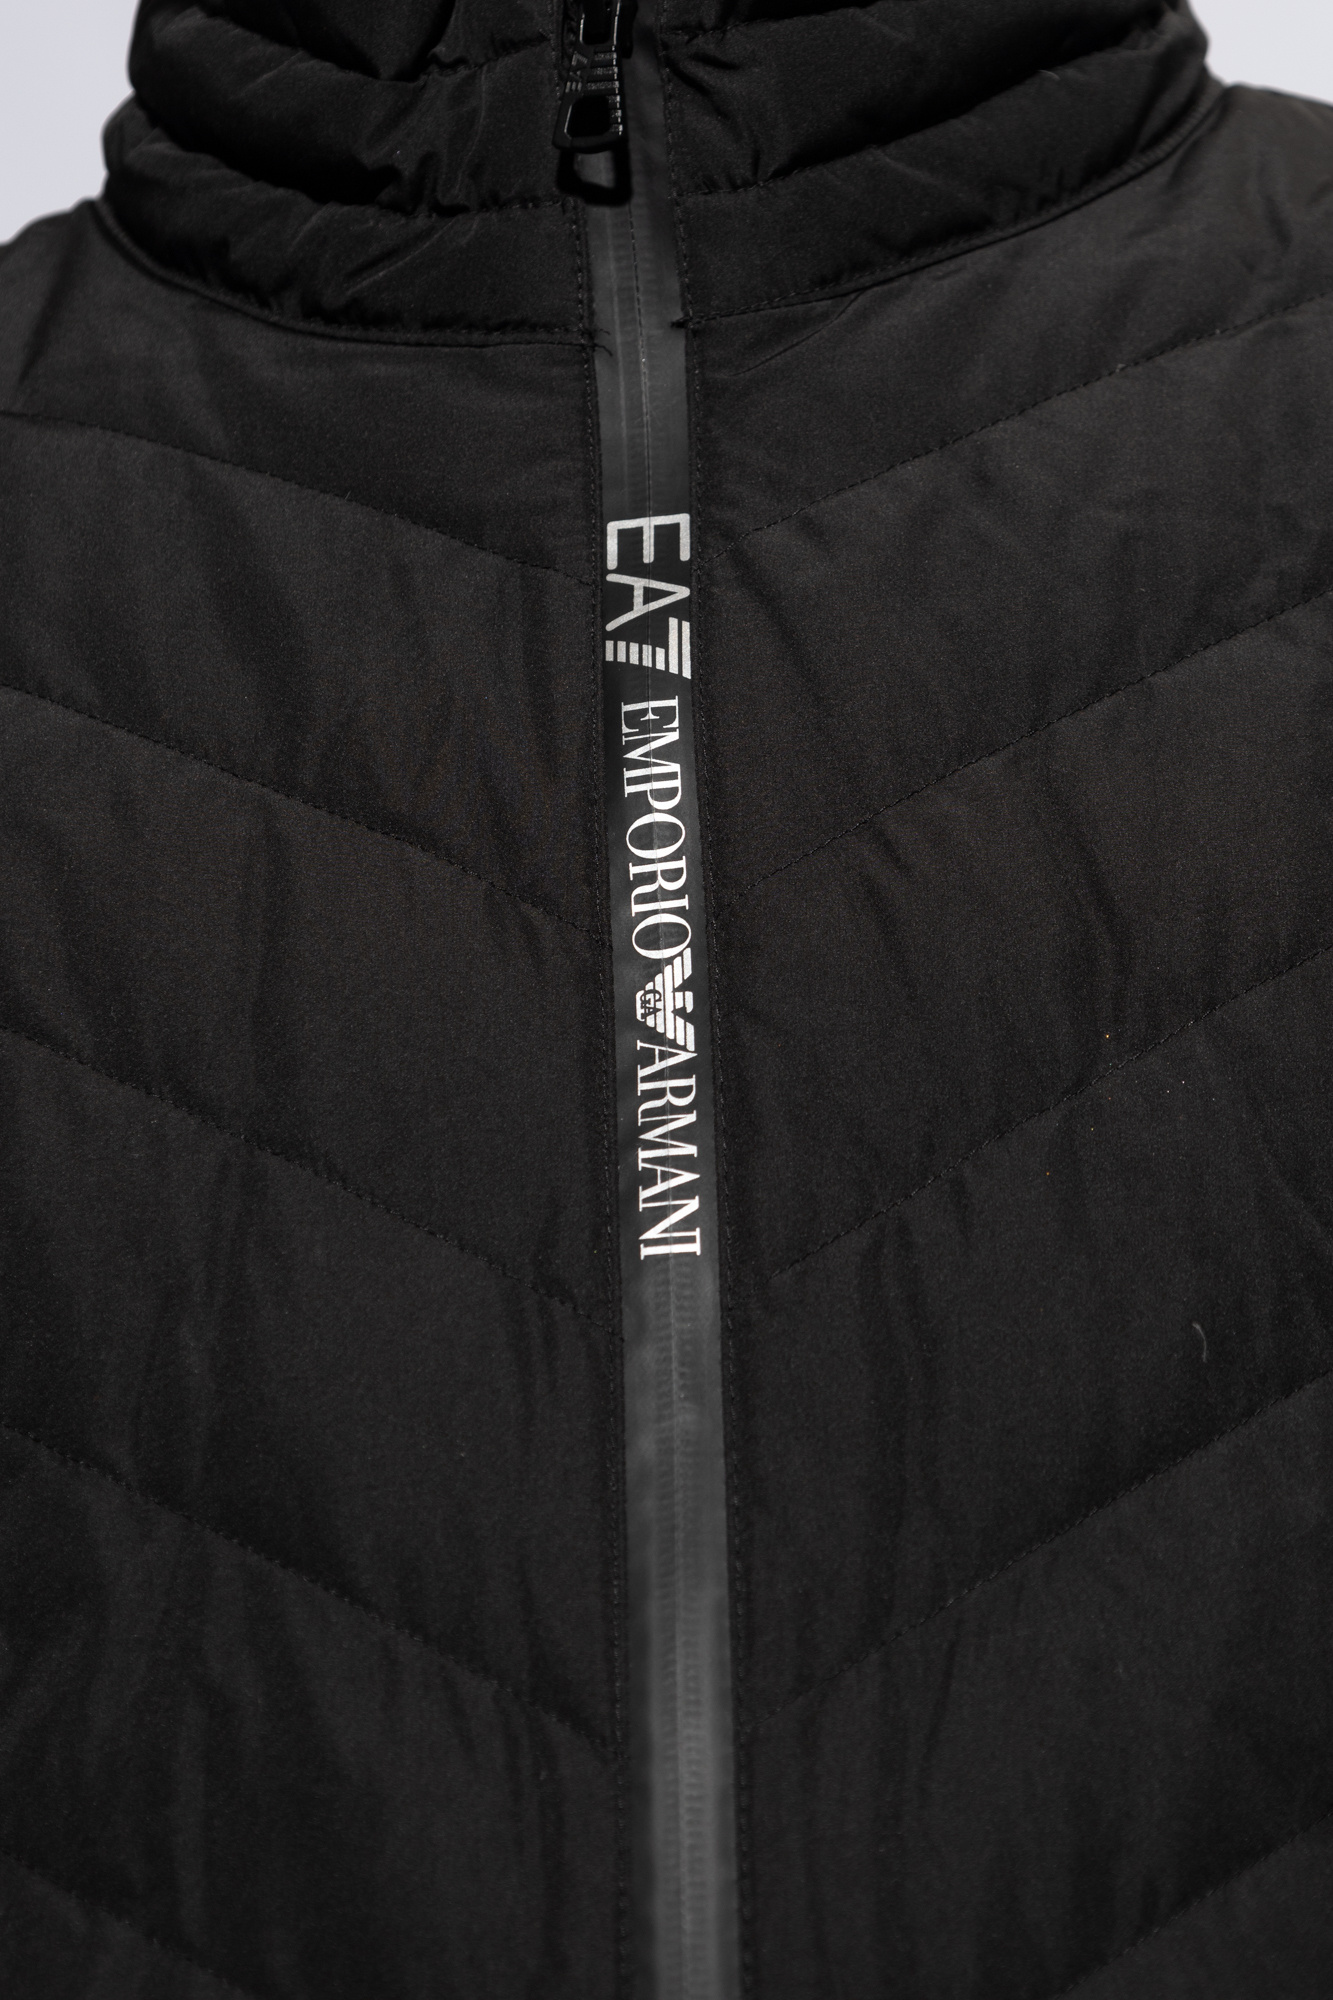 EA7 Emporio Armani Emporio Armani tuxedo suit